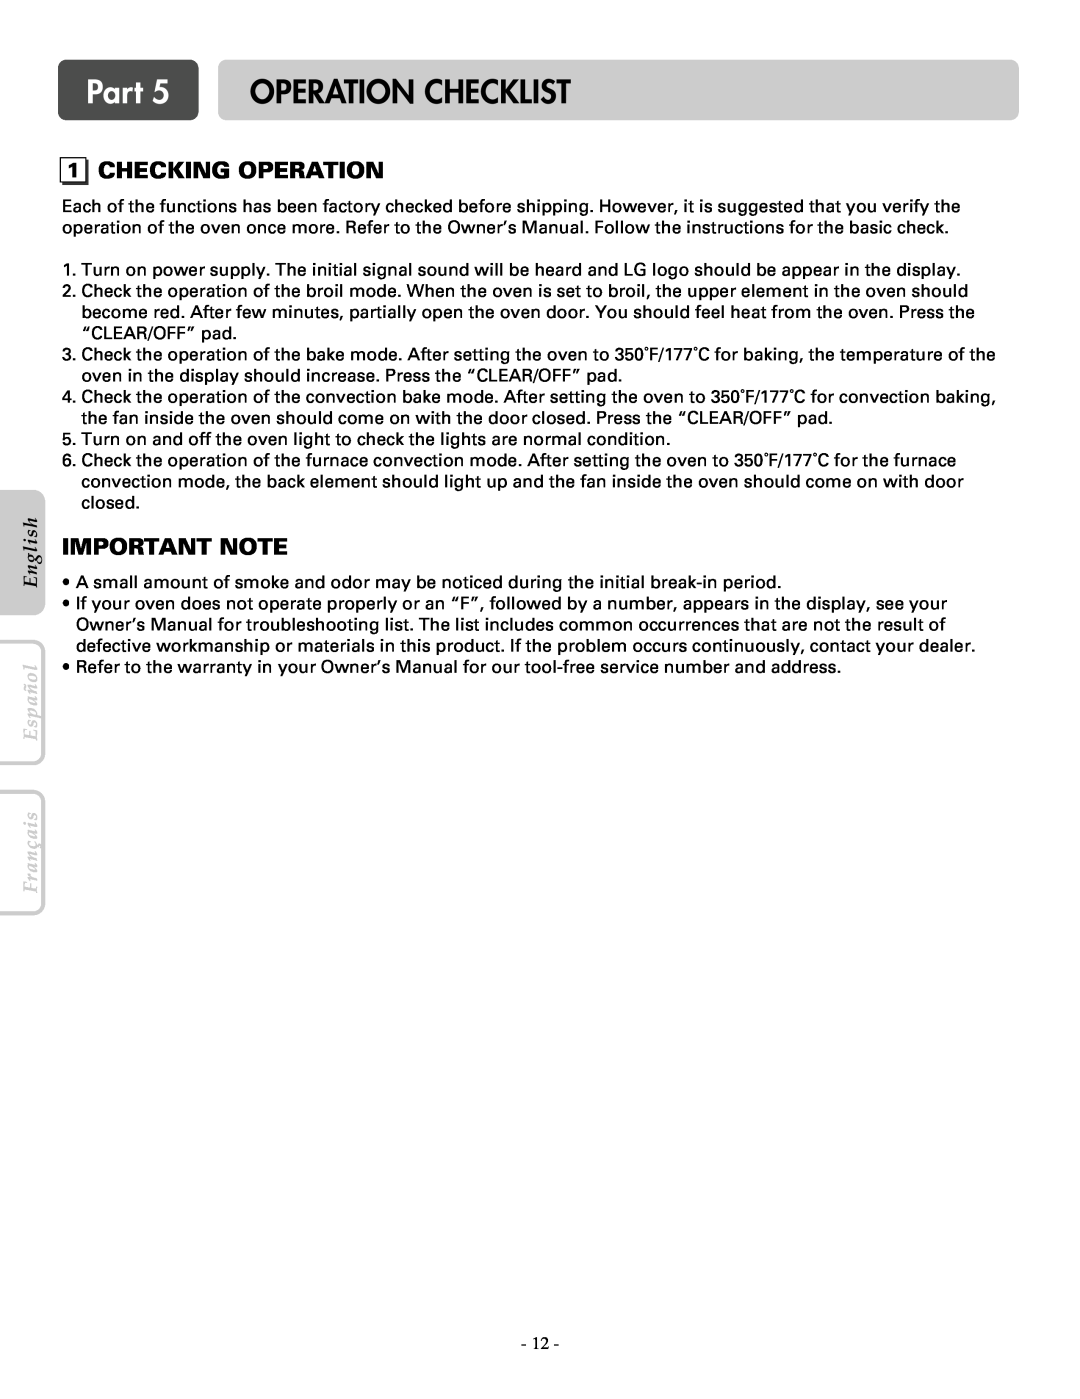 LG Electronics LWS3081ST Part 5 OPERATION CHECKLIST, Checking Operation, Important Note, English, Français Español 